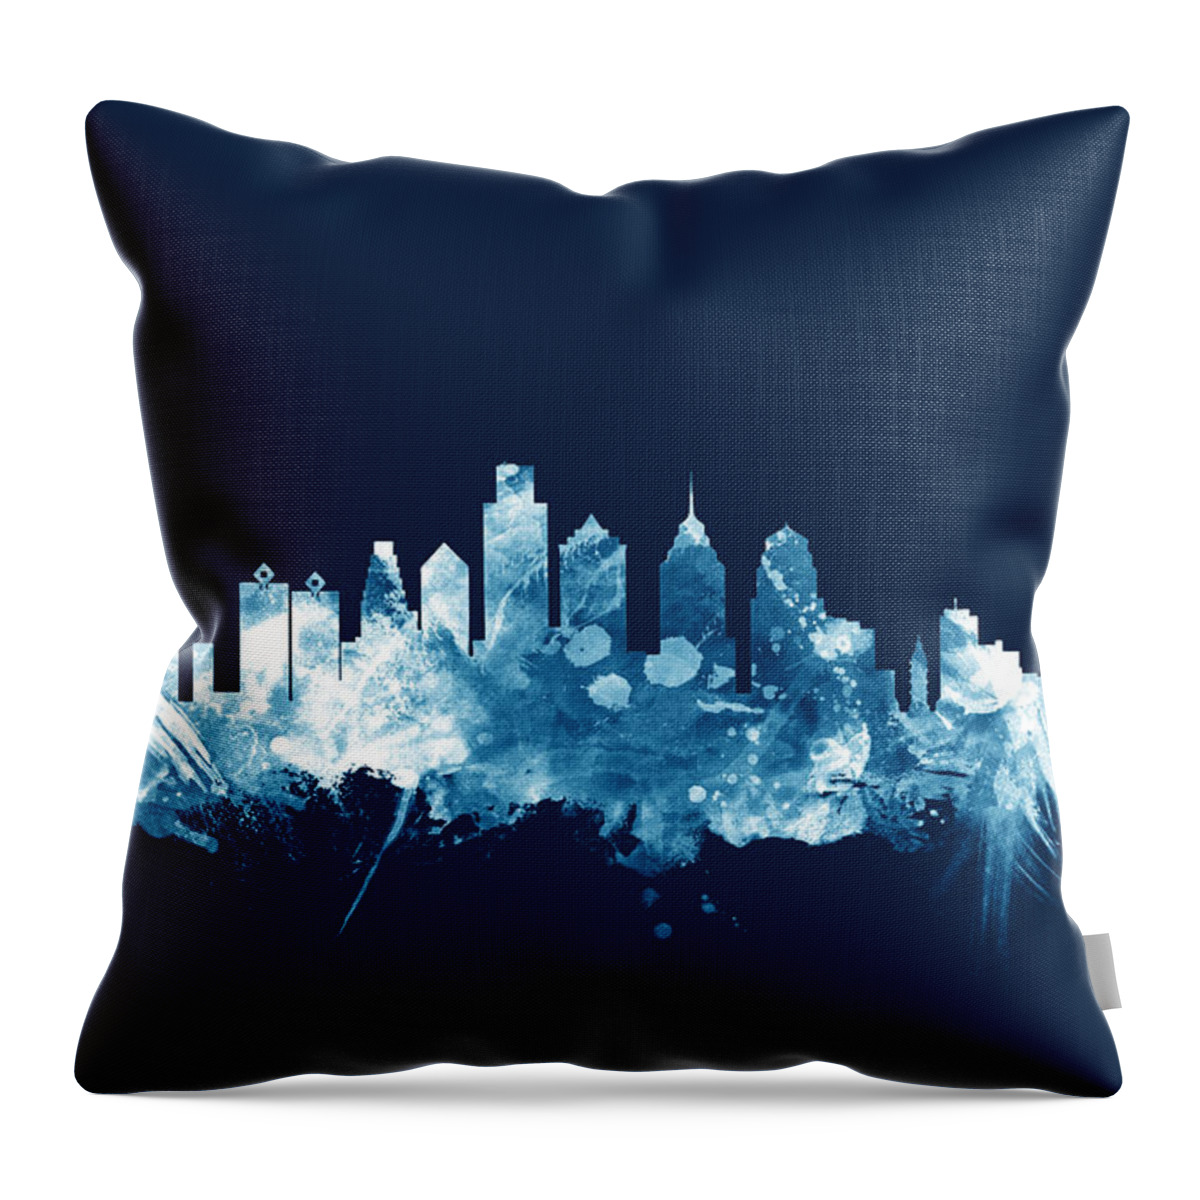 Philadelphia Throw Pillow featuring the digital art Philadelphia Pennsylvania Skyline by Michael Tompsett